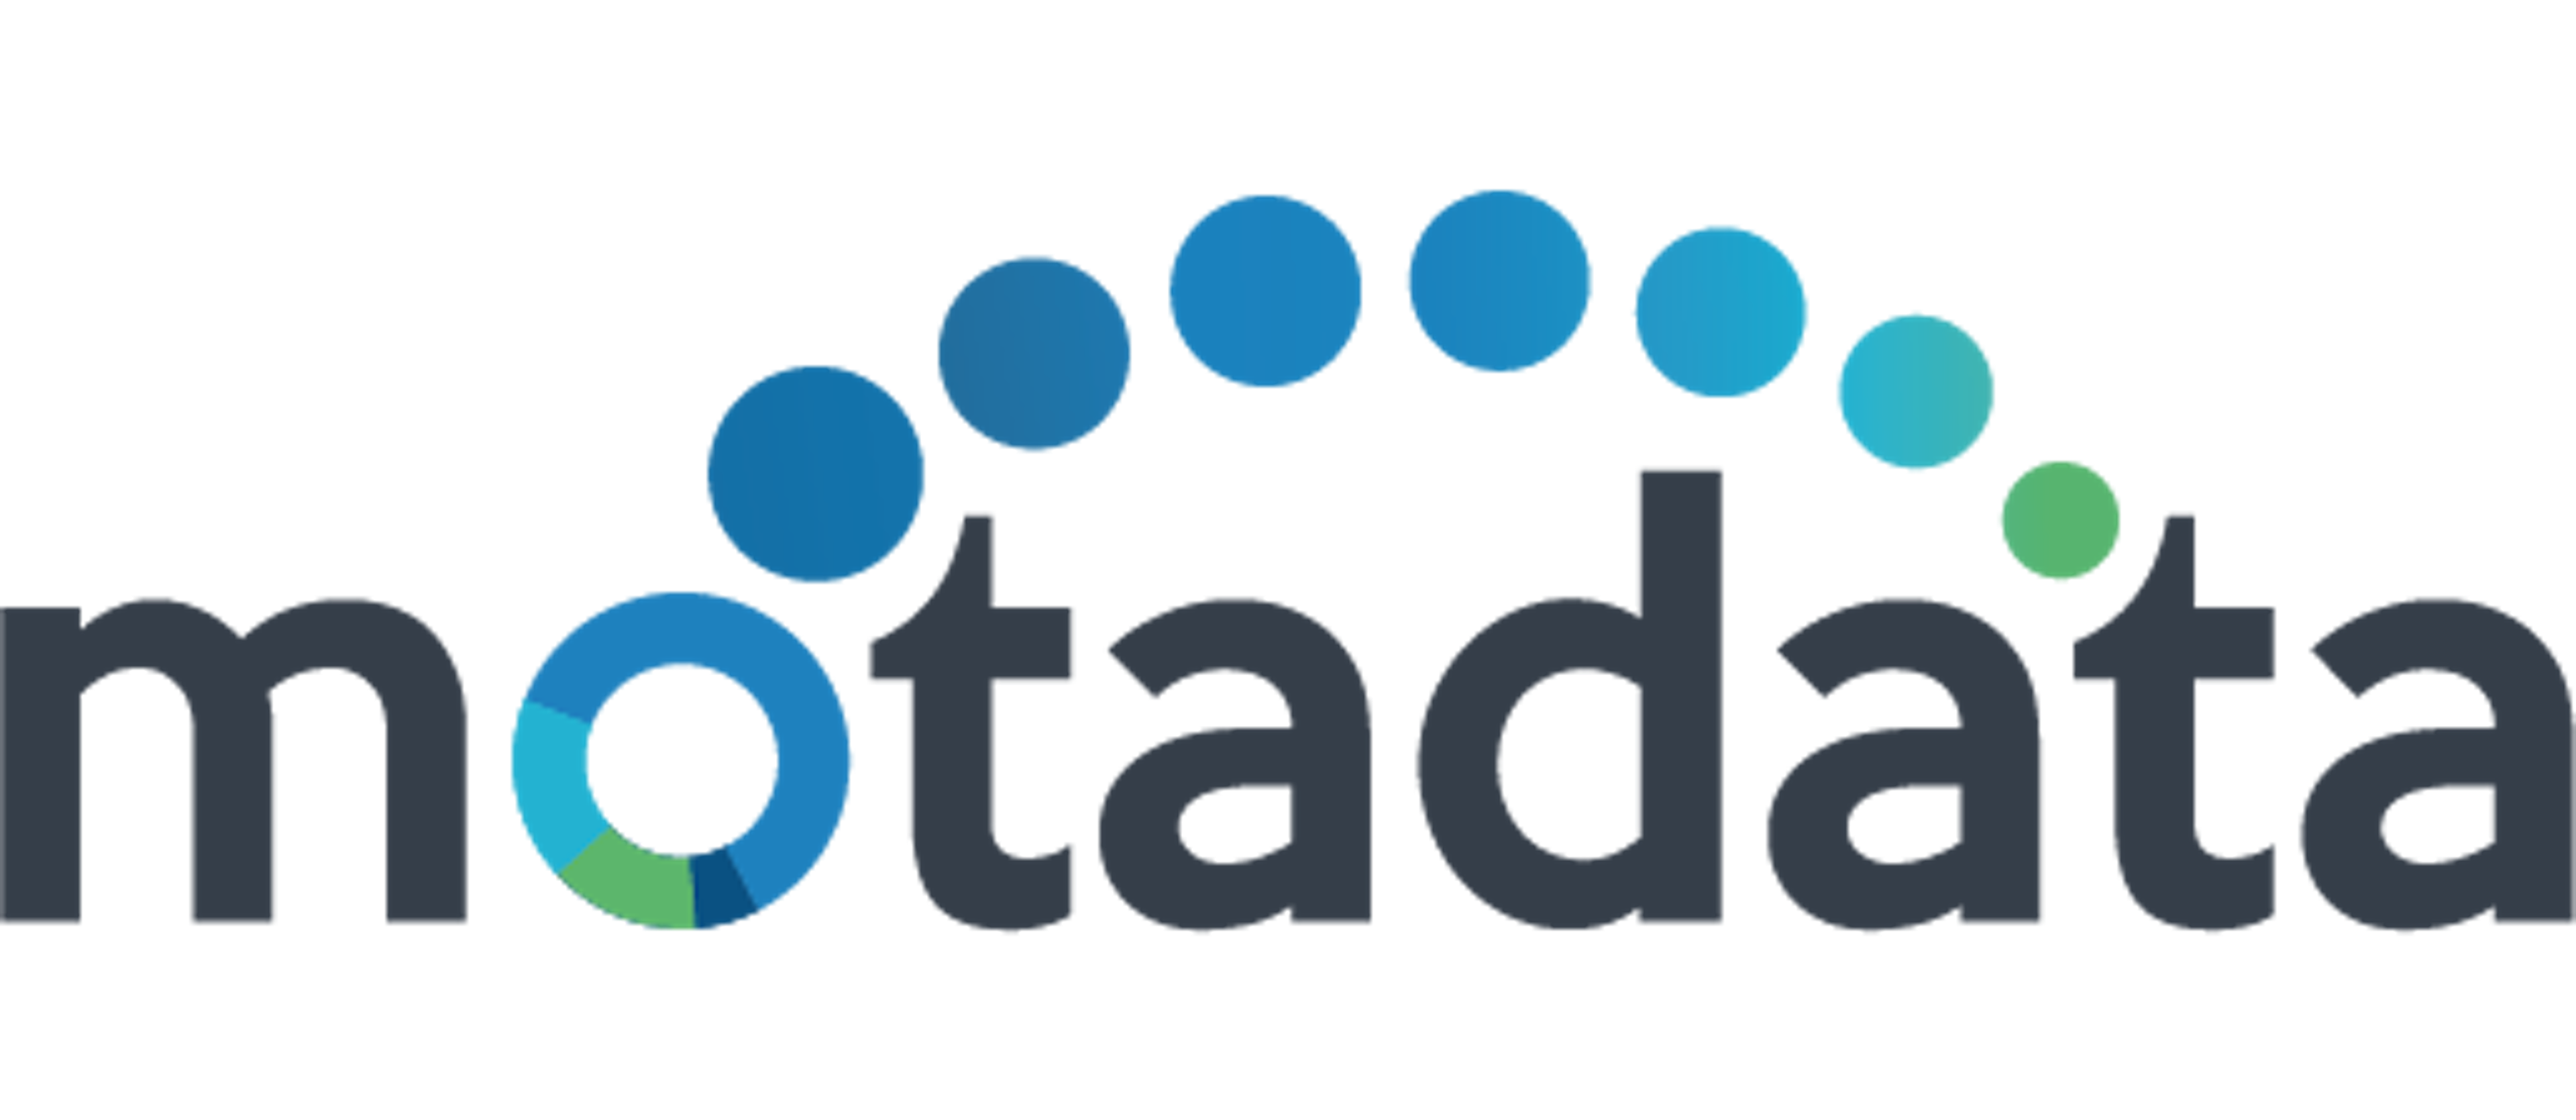 Motadata ServiceOps Logo